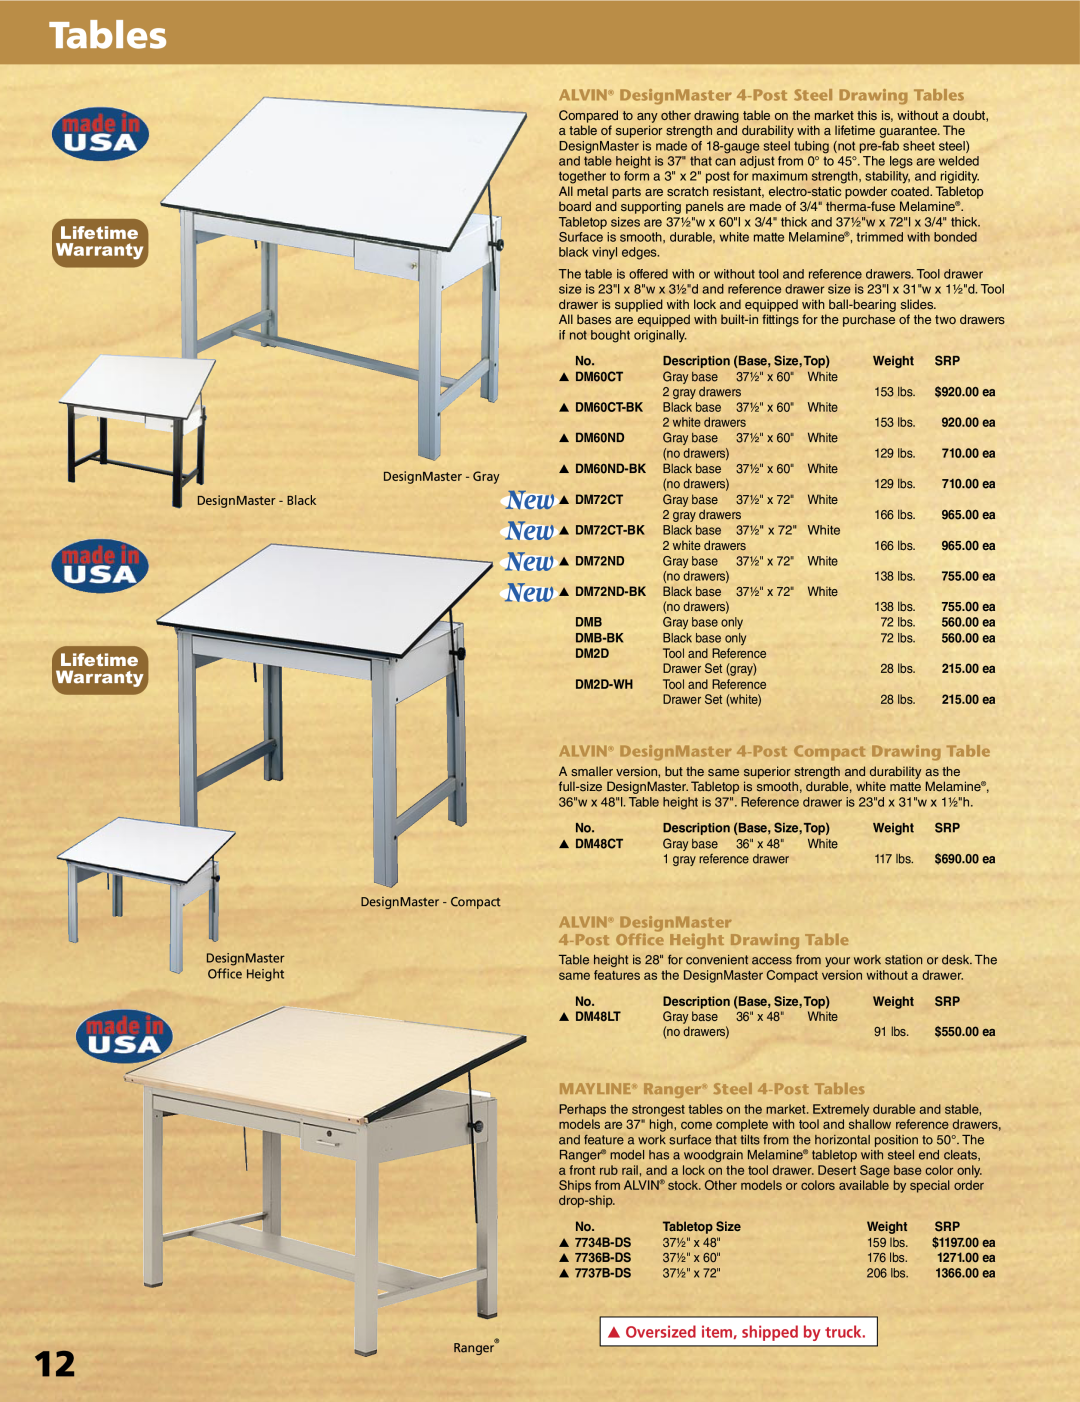 Alvin XX-4-XB manual Lifetime Warranty, ALVIN DesignMaster 4-PostSteel Drawing Tables, PostOffice Height Drawing Table 